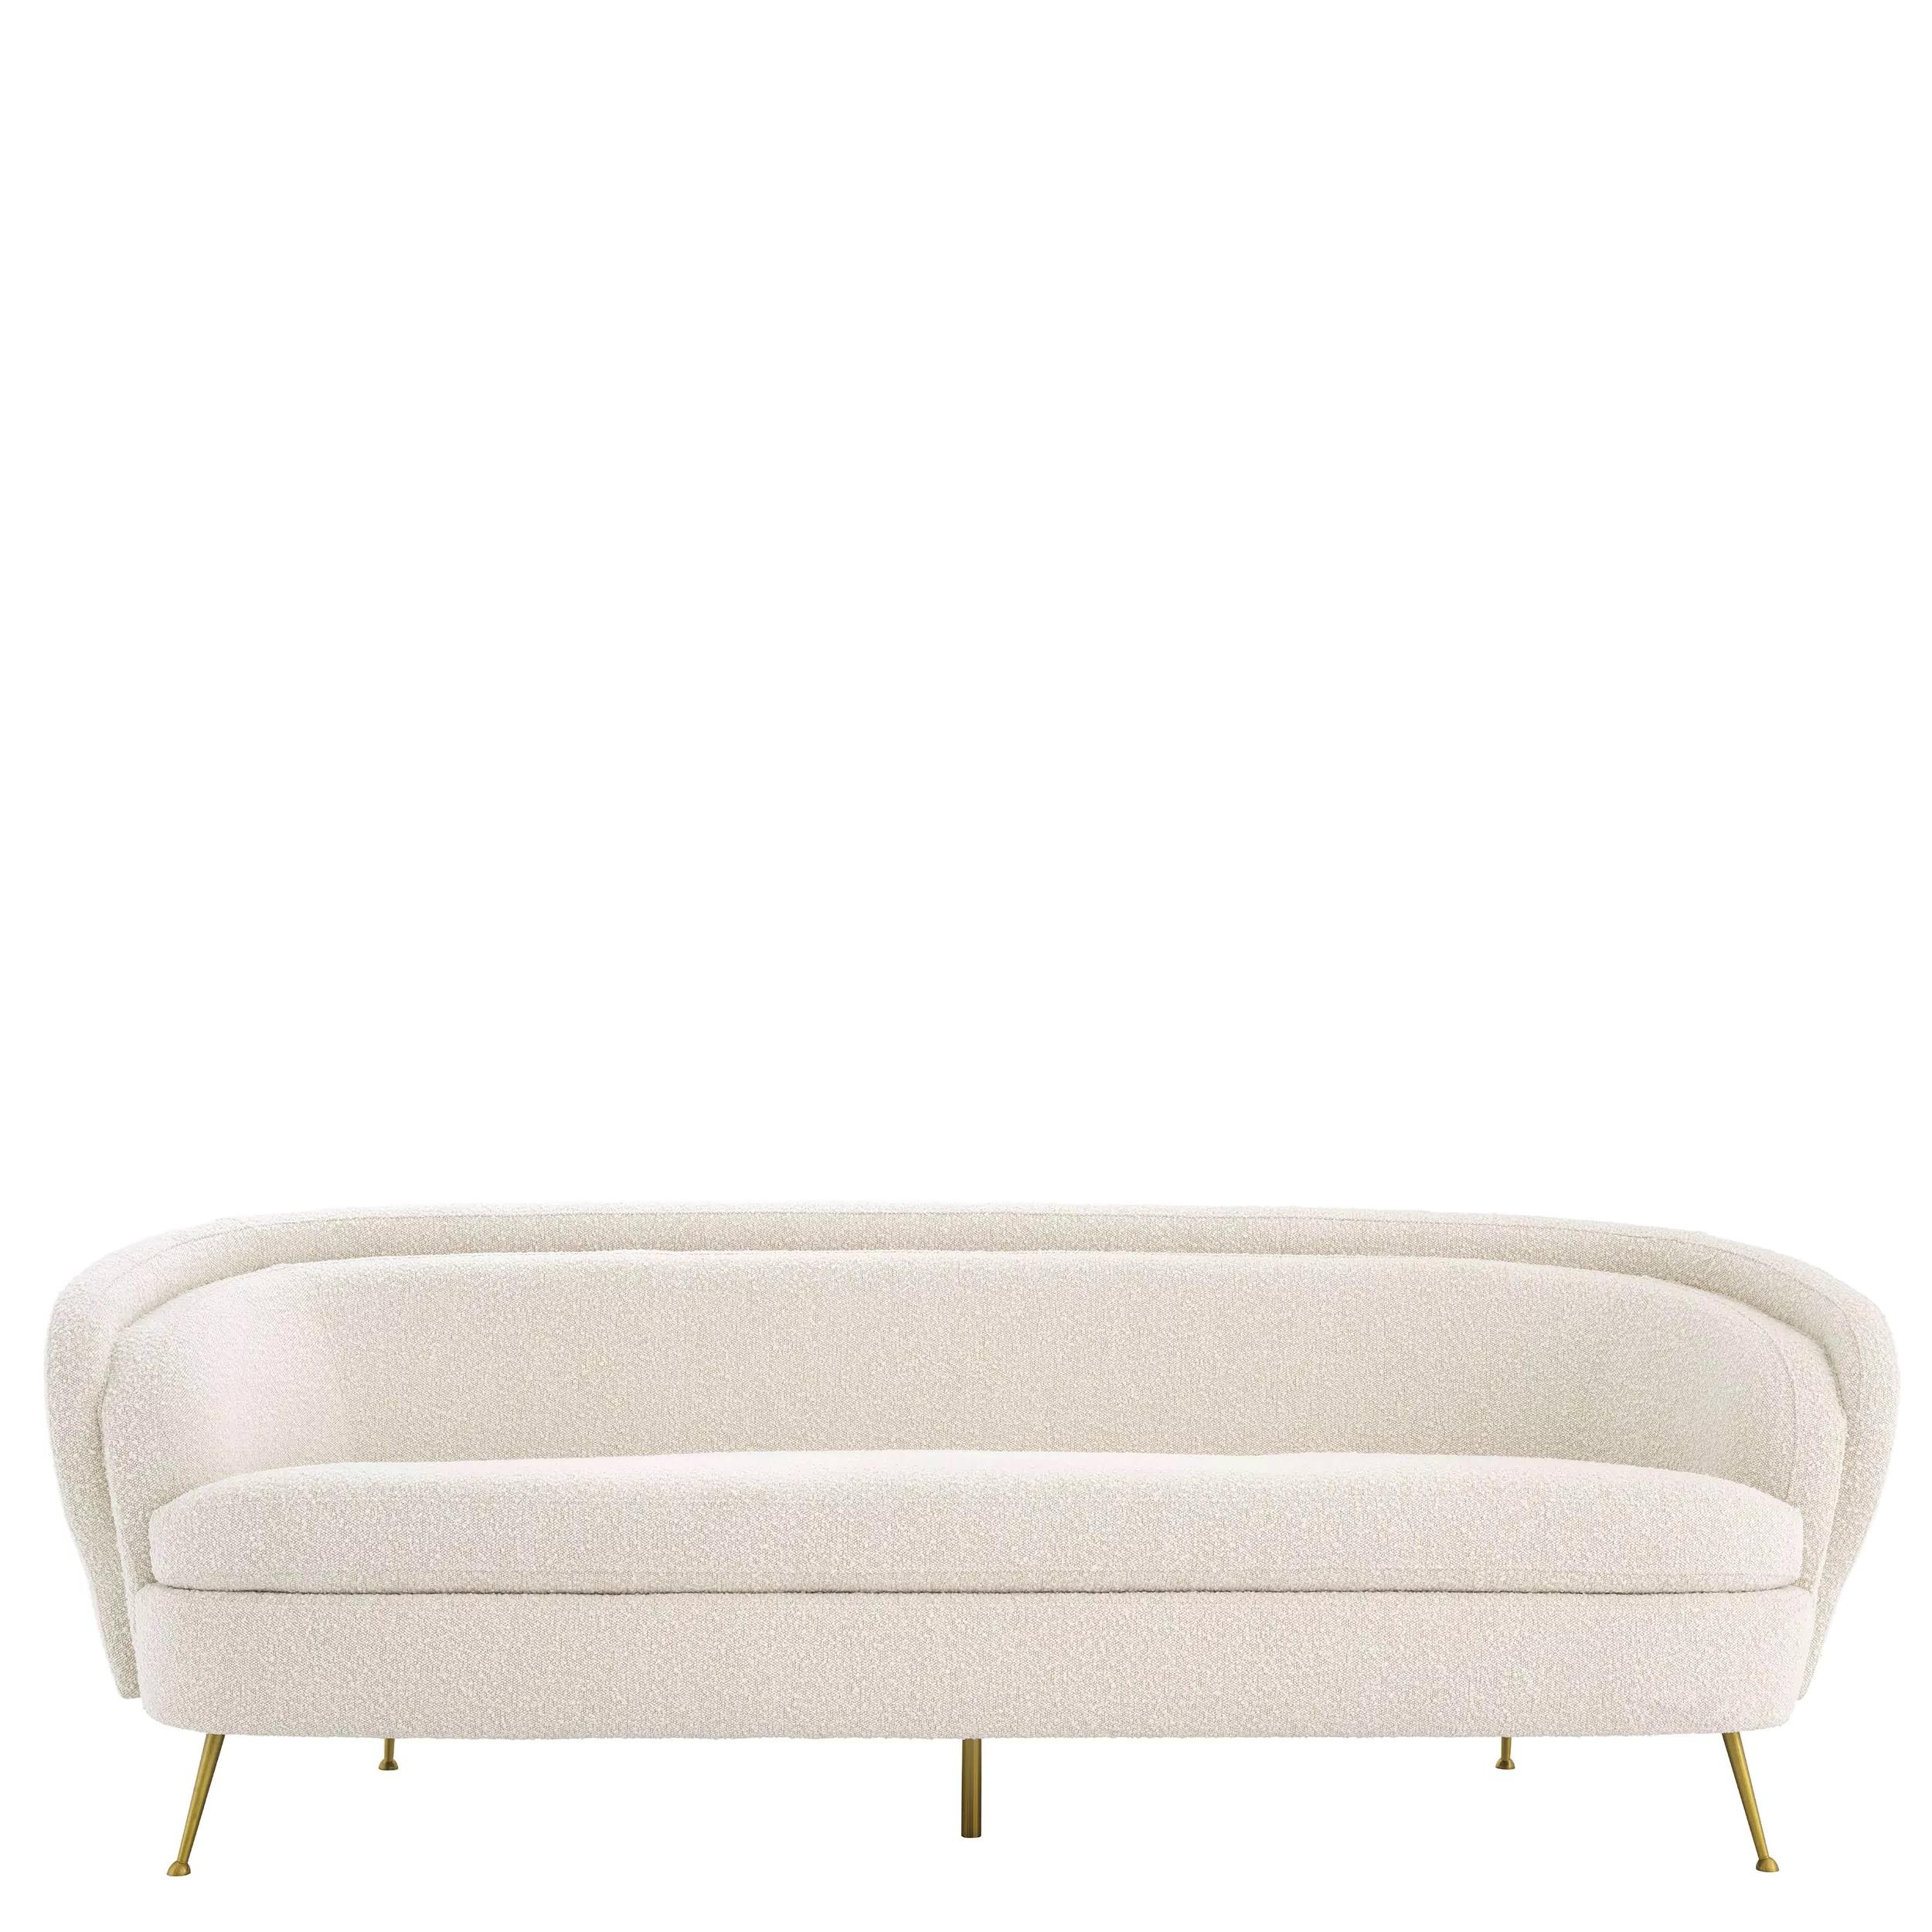 Contemporary 1950s Italian Design Style Bouclé Fabric And Brass Feet Sofa For Sale